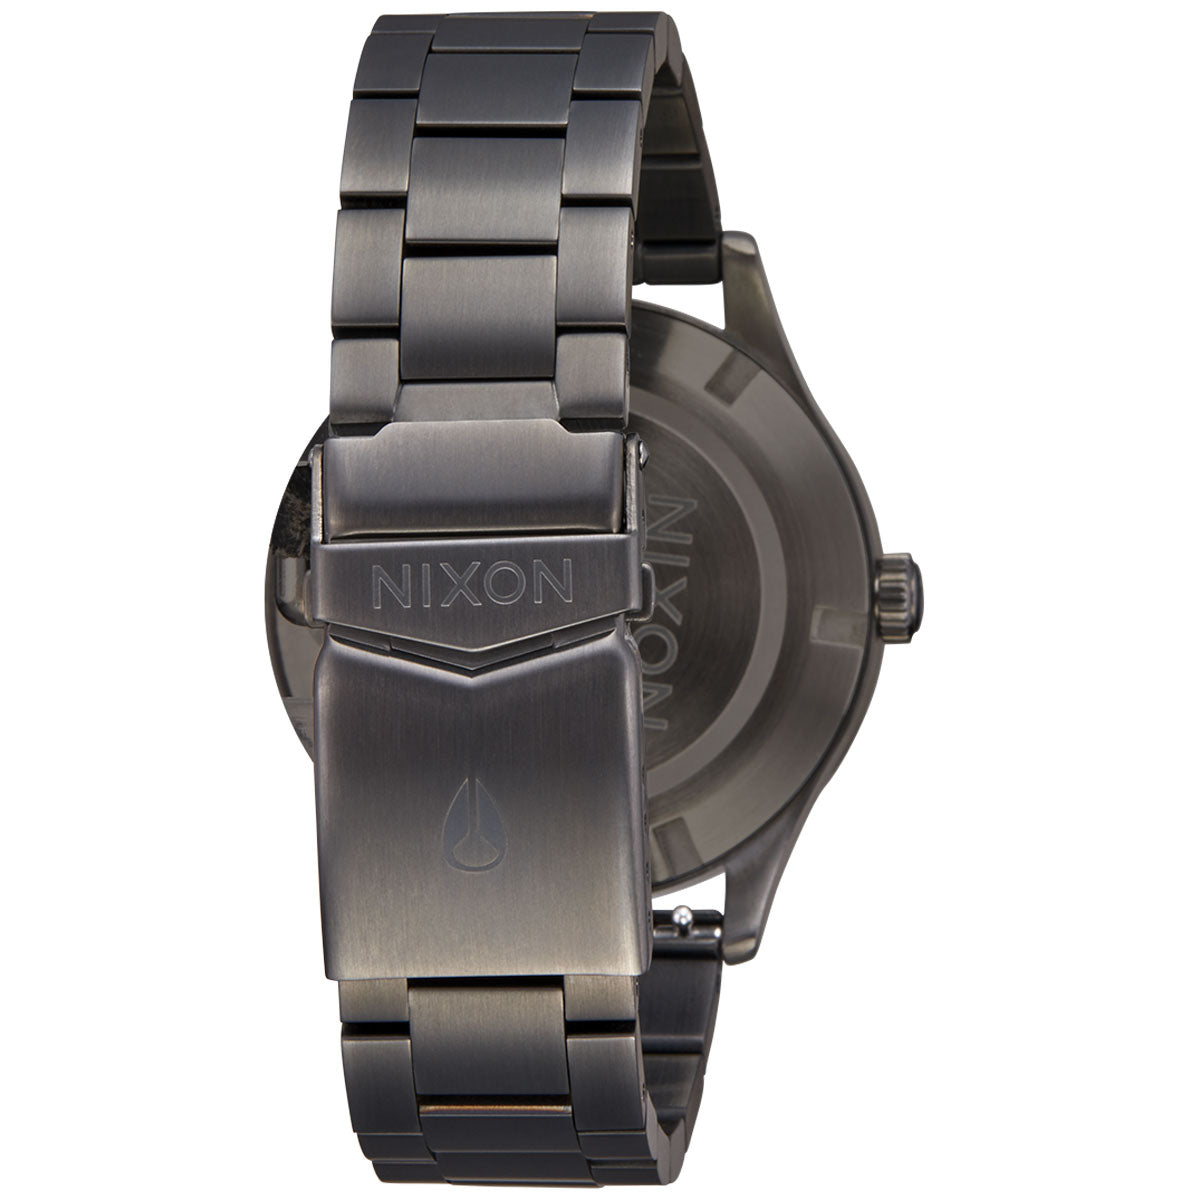 Nixon Sentry Solar Stainless Steel Watch - Gunmetal image 2